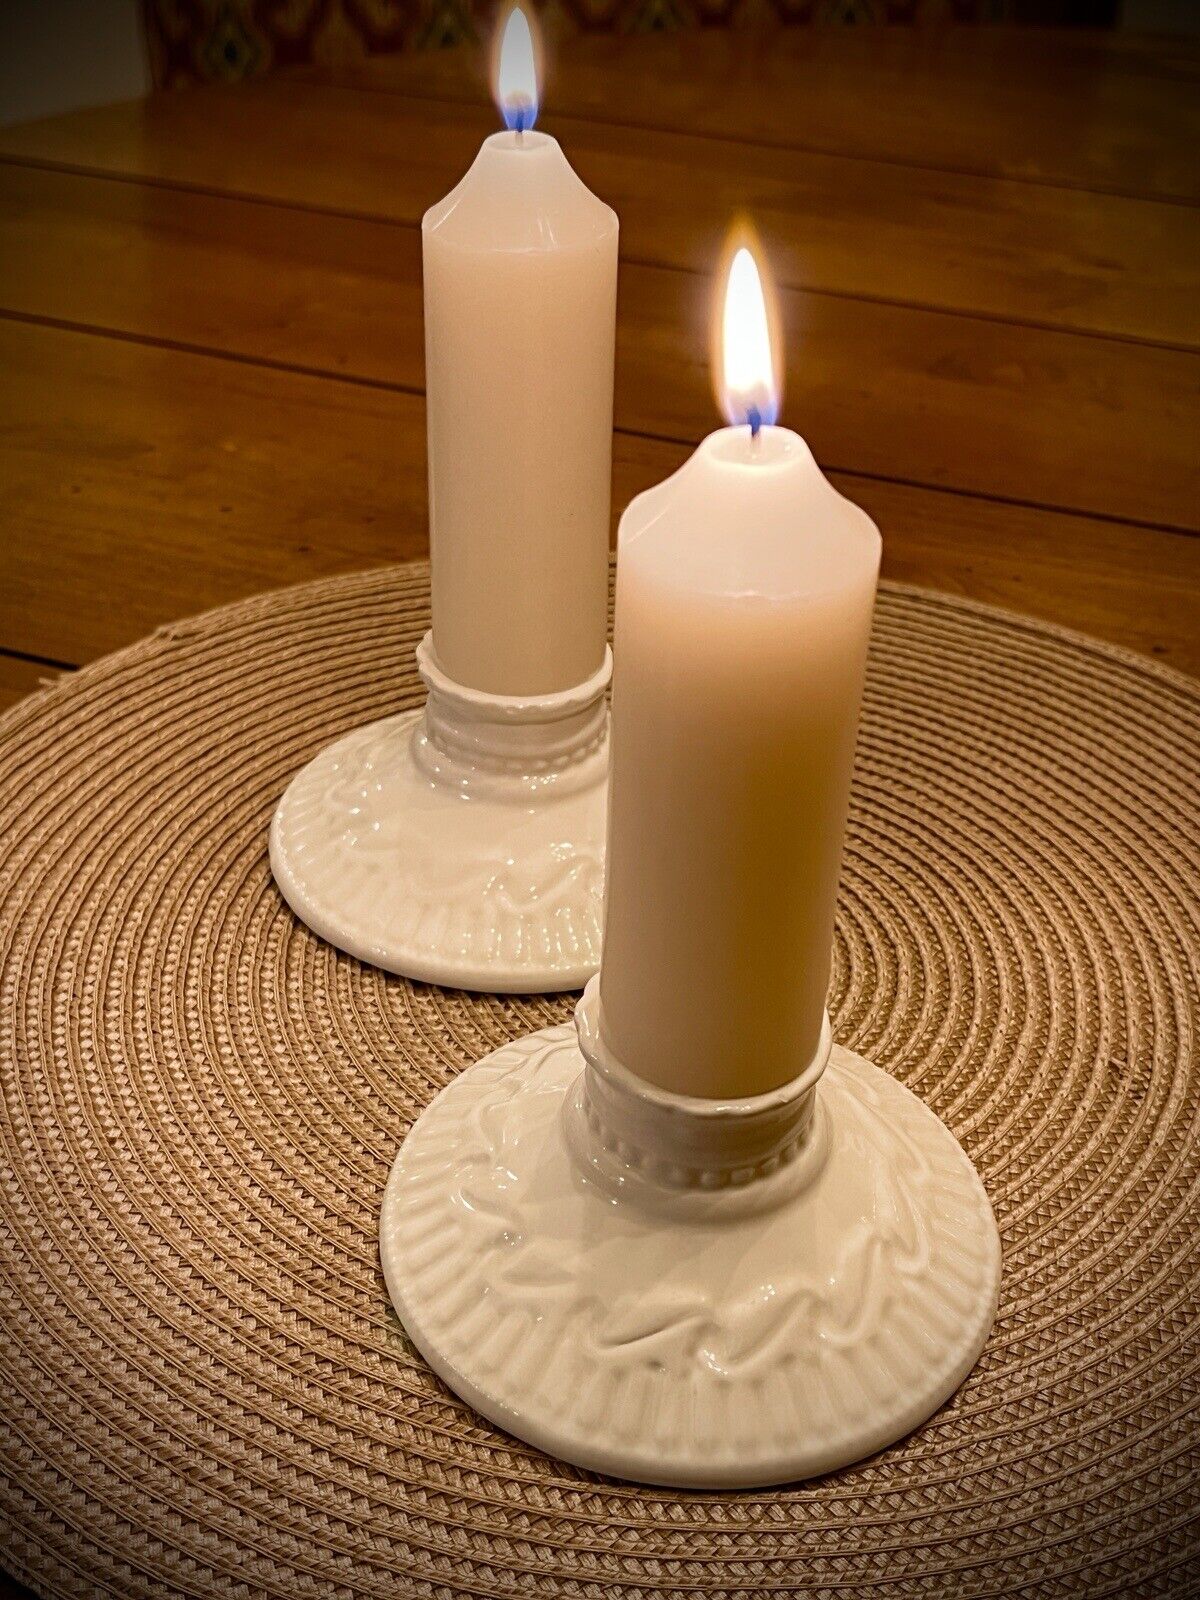 White Ceramic Candleholders